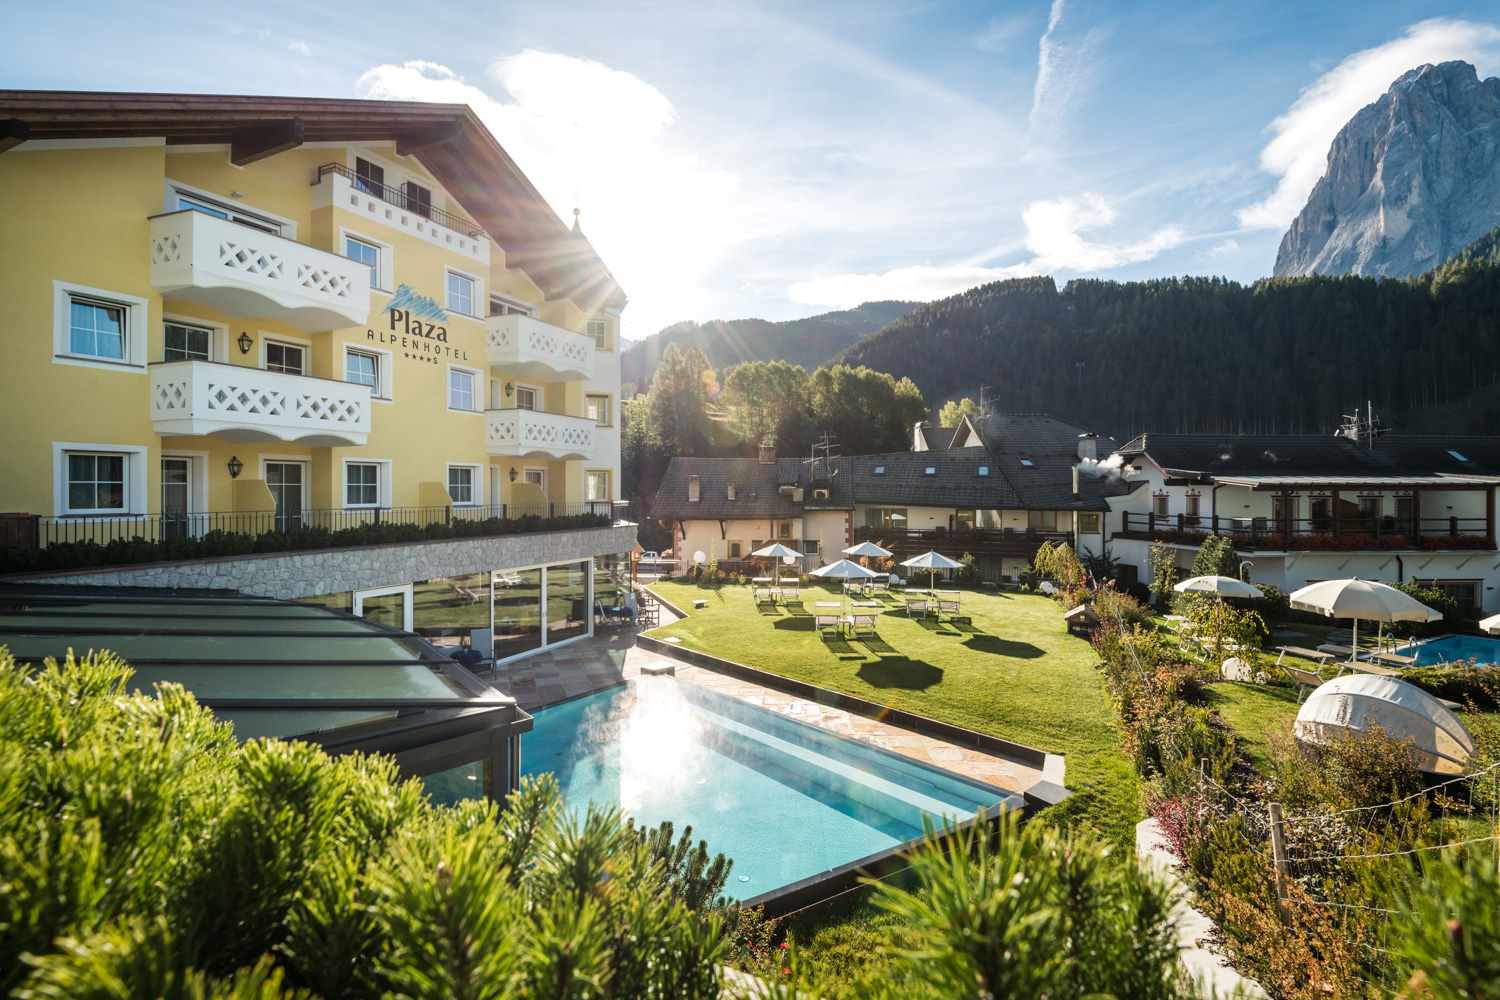 Alpenhotel Plaza Val Gardena, South Tyrol - Italy